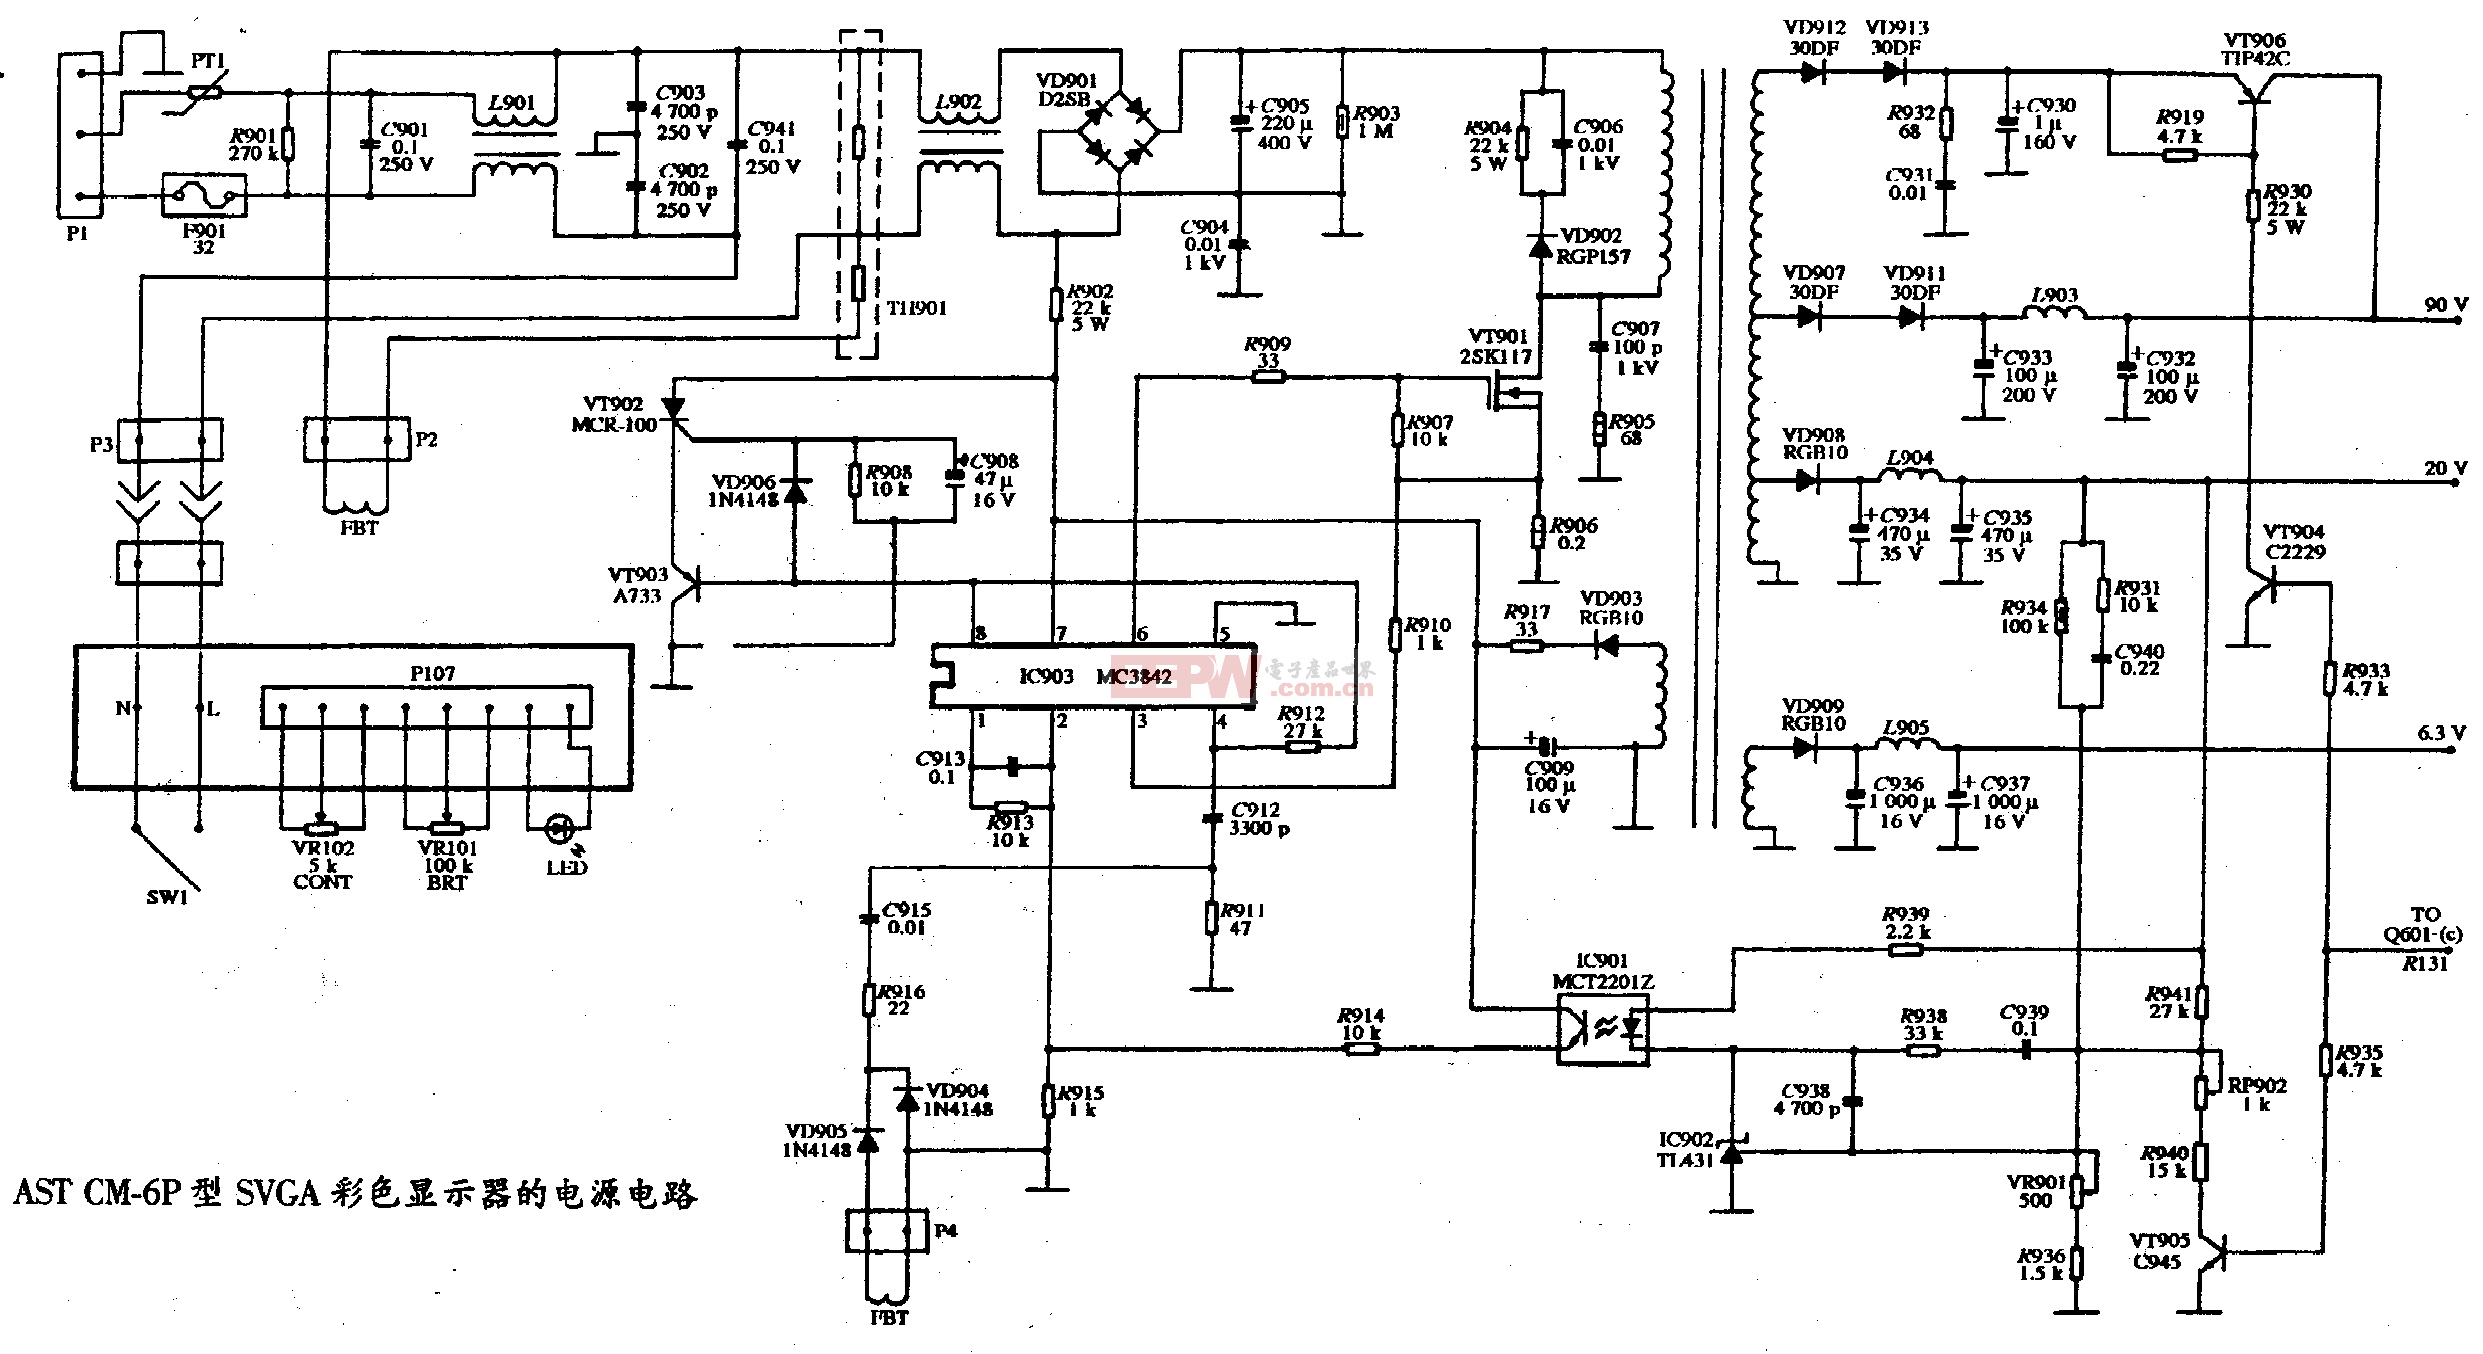 10、AST CM-6P型SVGA彩色显示器的电源电路图